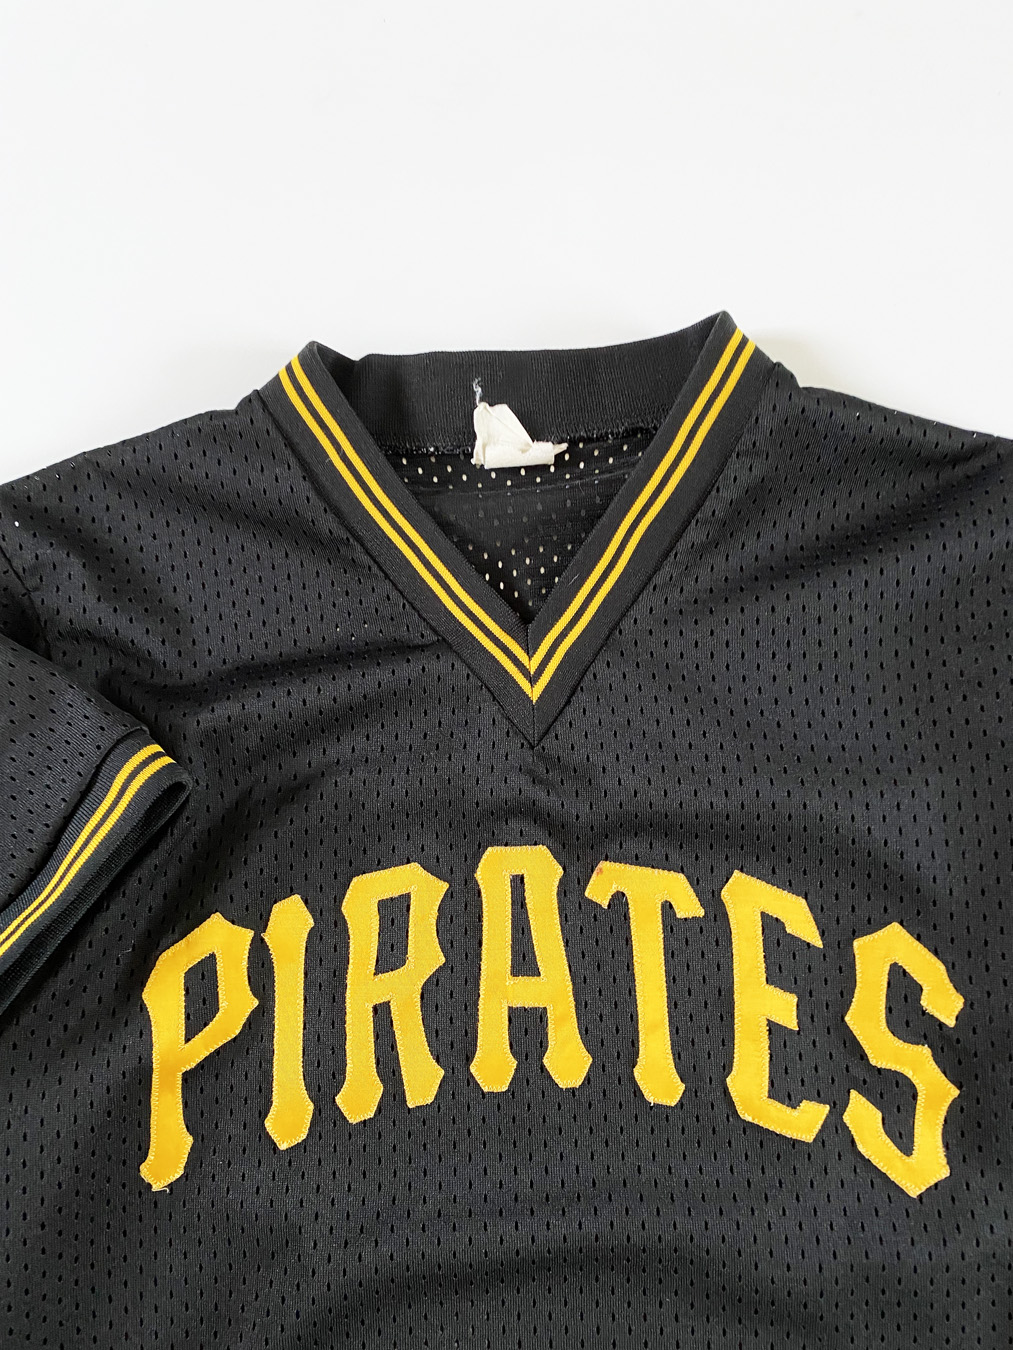 80s Pittsburgh Pirates Black Mesh Baseball Jersey